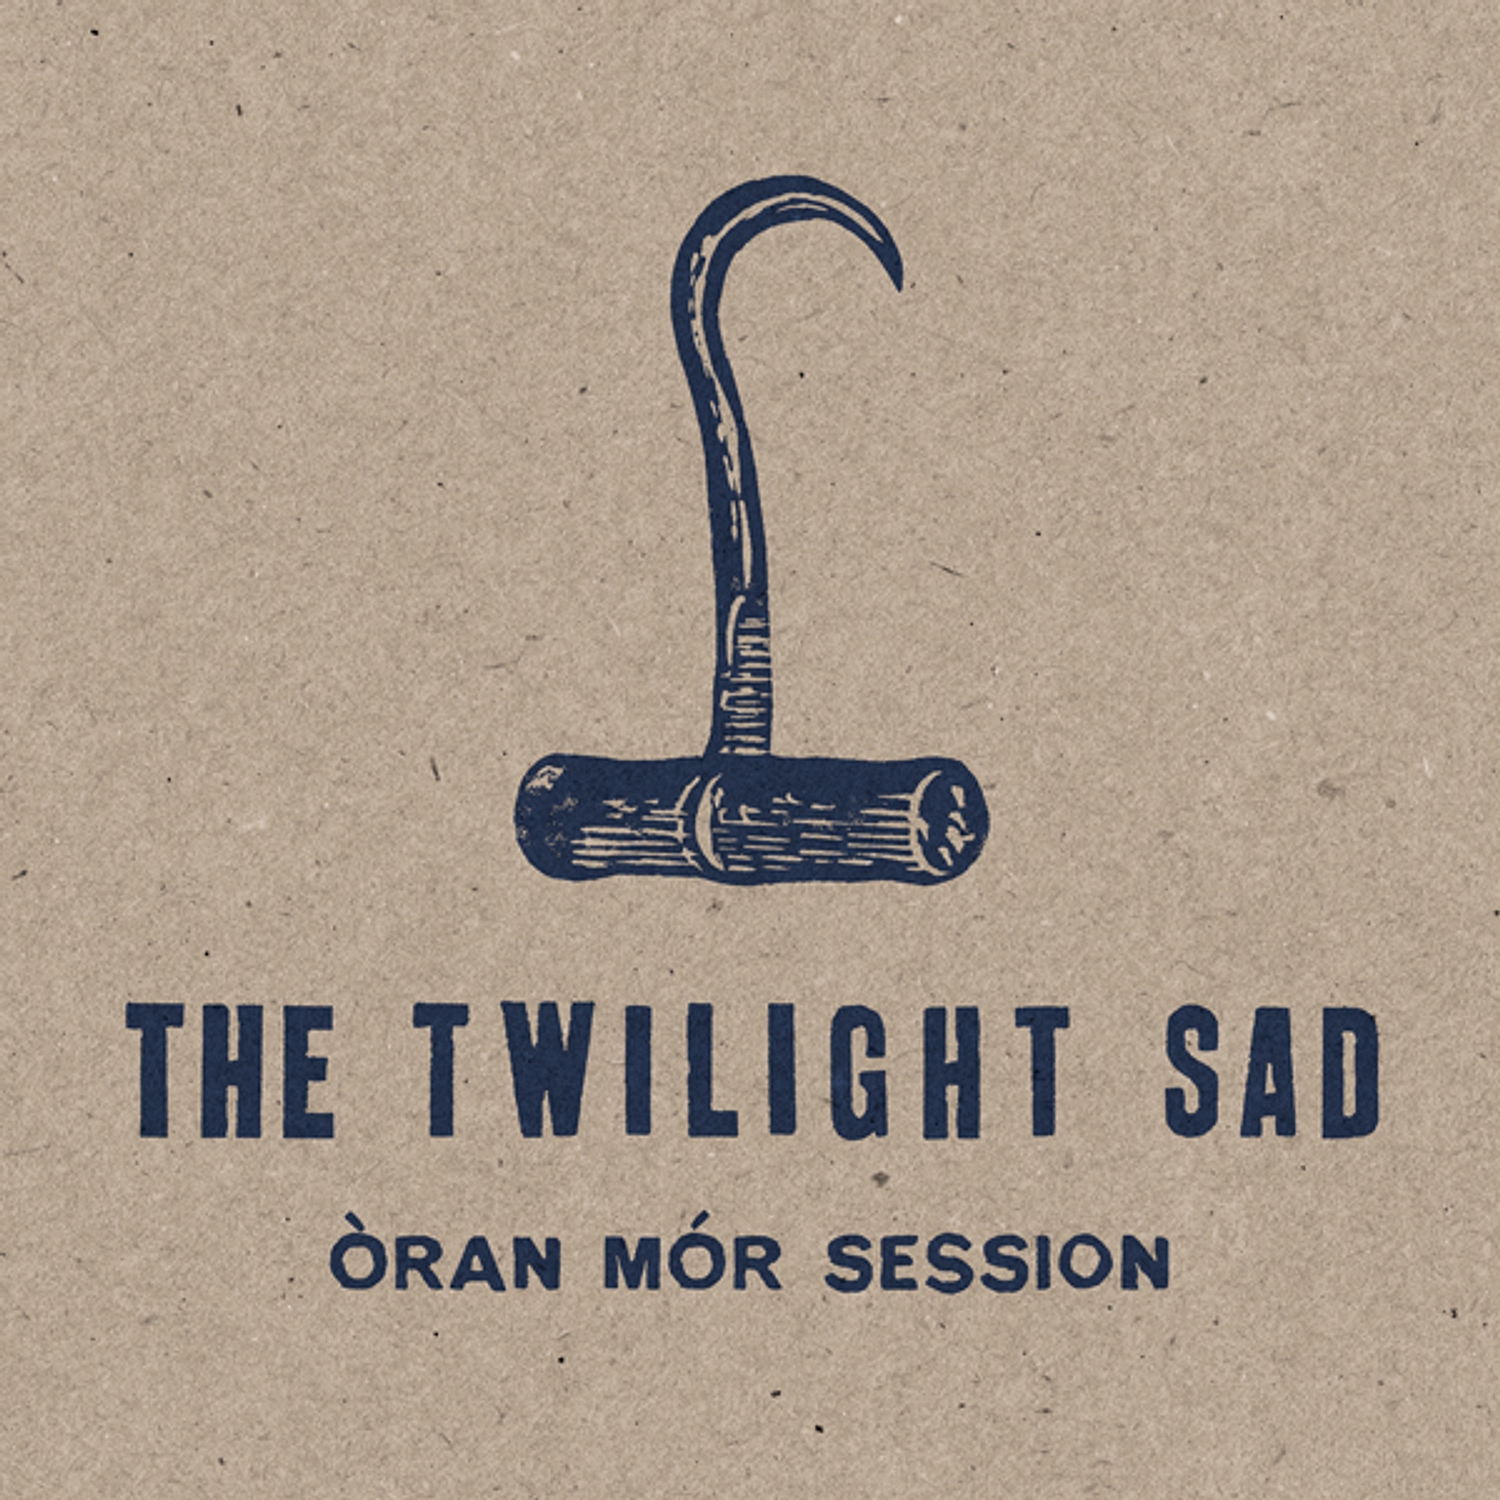 The Twilight Sad announce ‘Òran Mór Session’ album, share ‘It Never Was the Same’ video